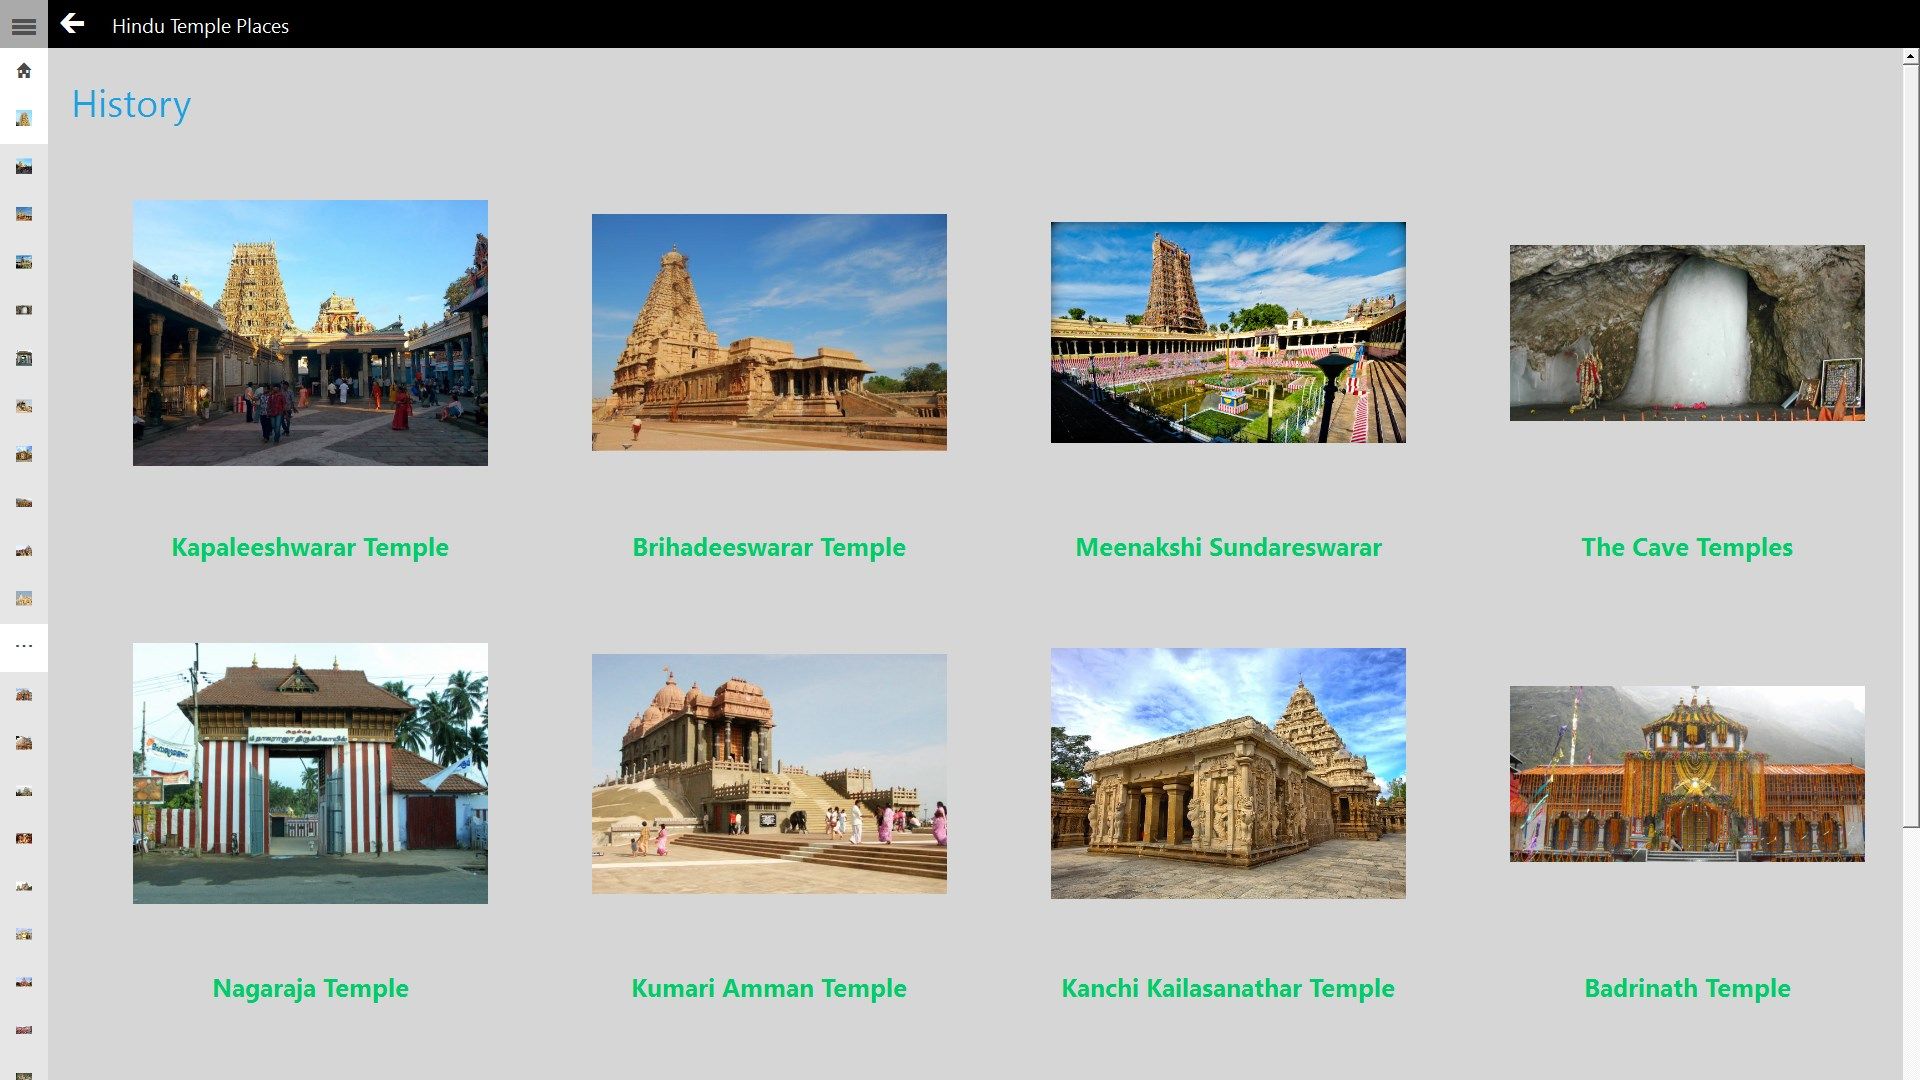 Hindu Temple Places